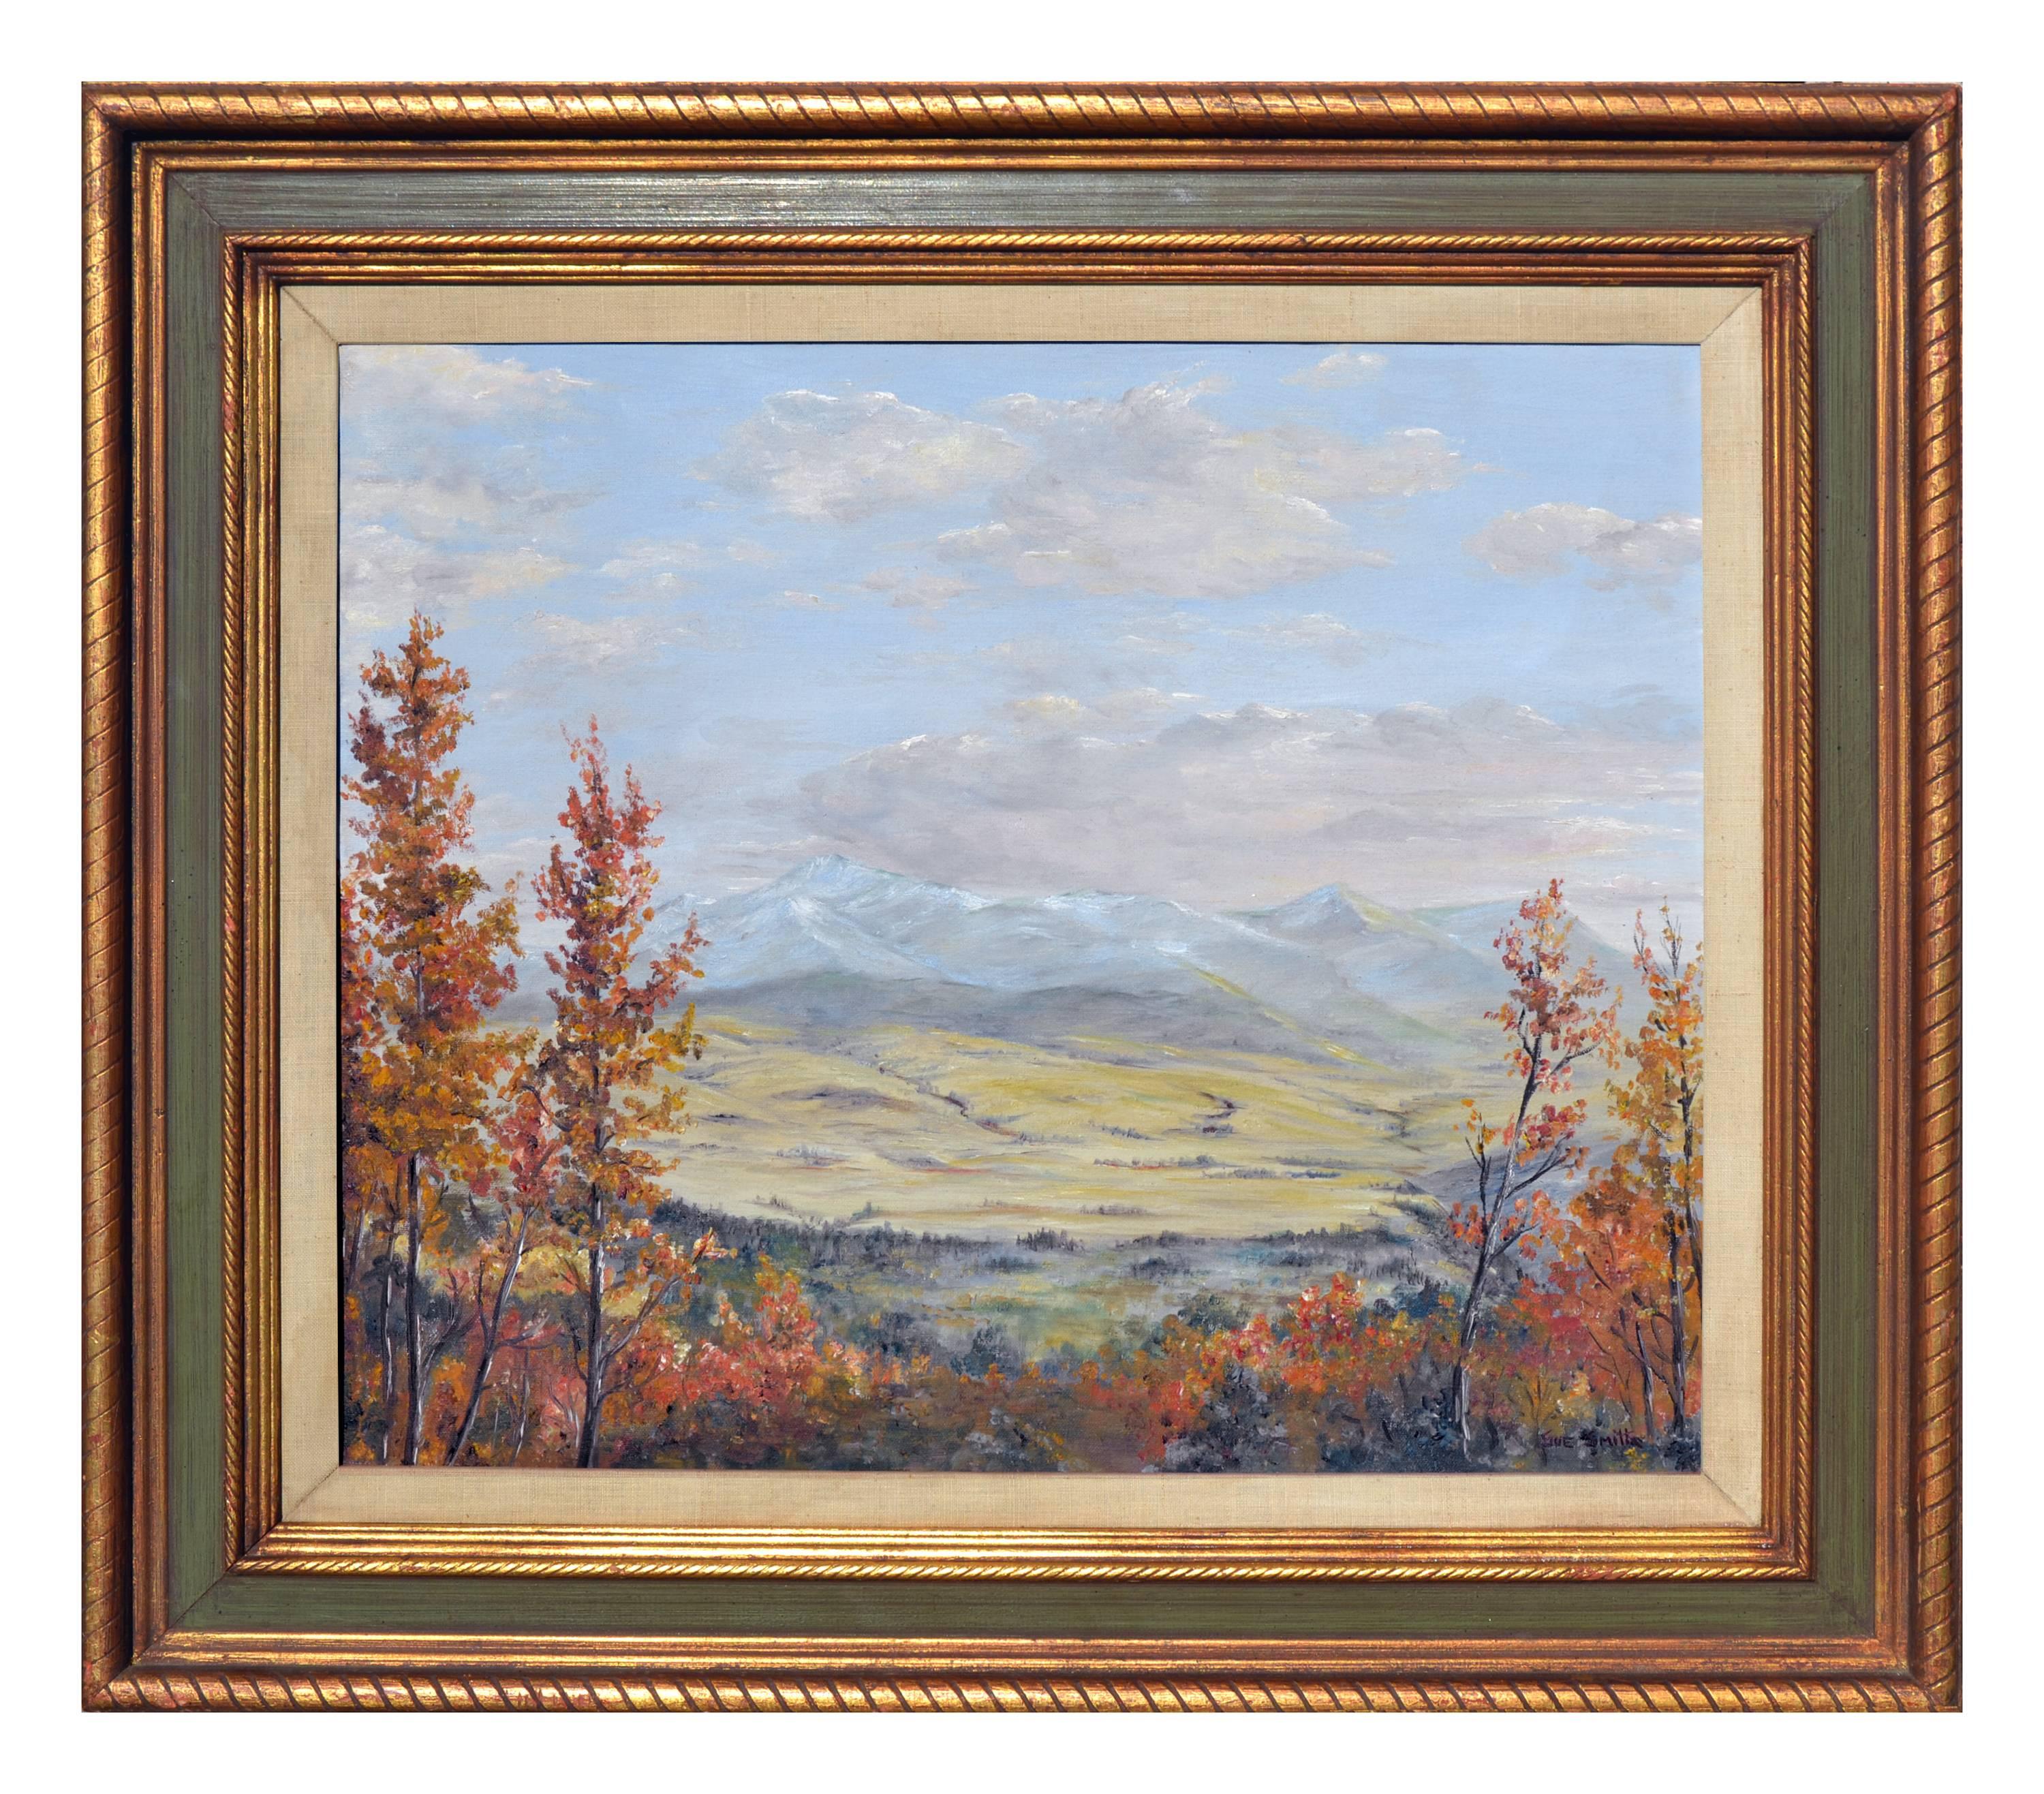 Sue Smith Landscape Painting - The Lookout - Autumnal California Landscape 